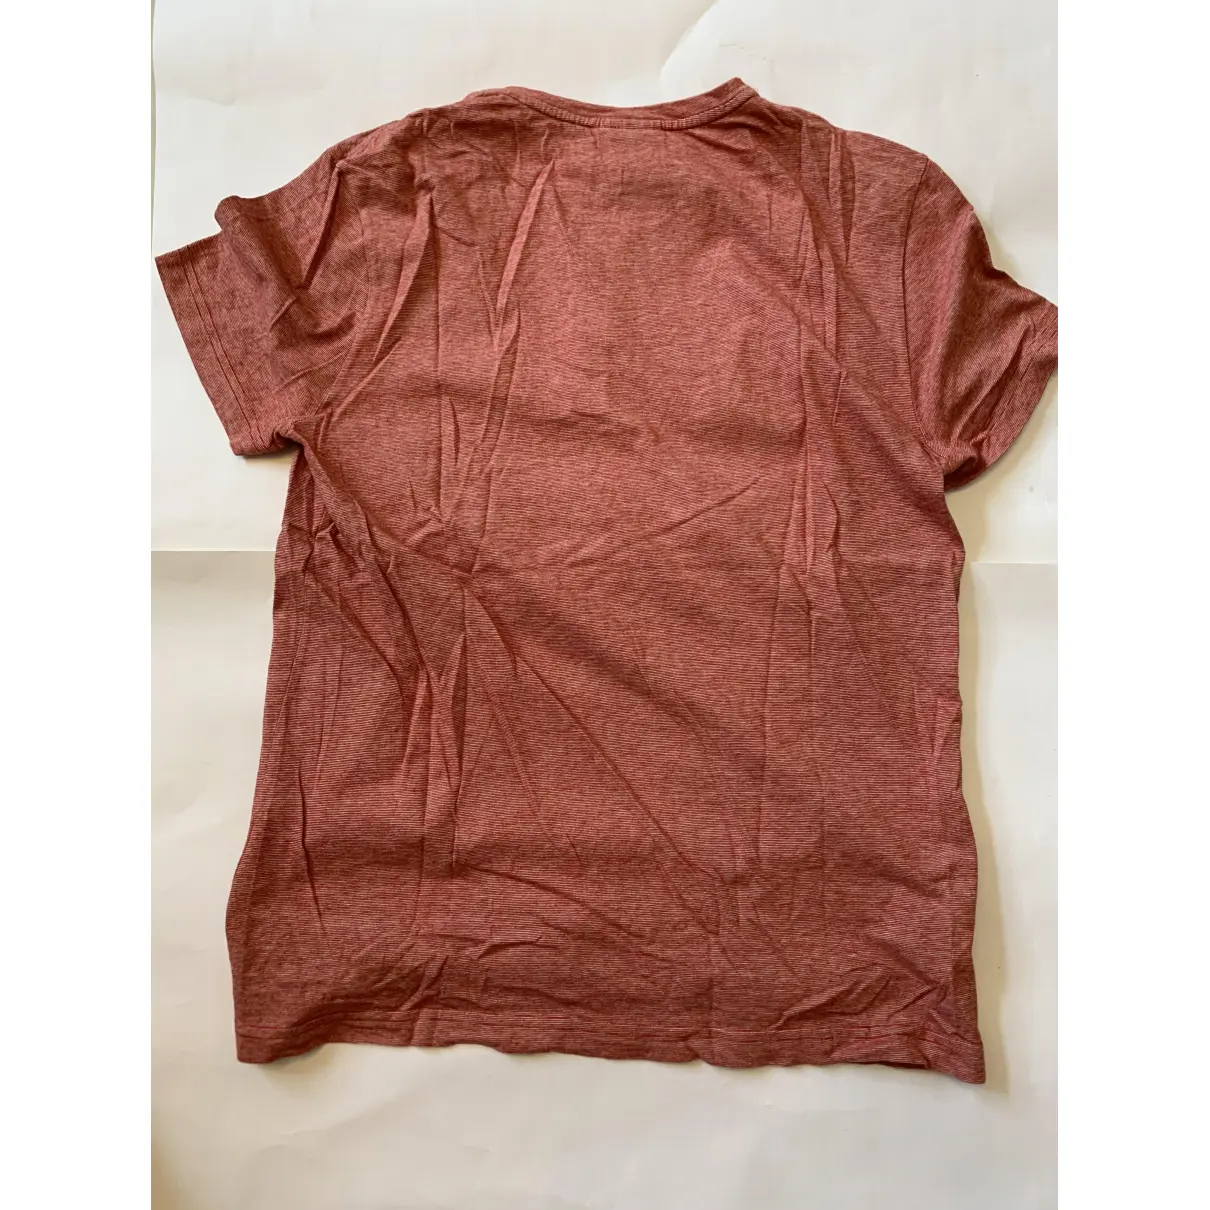 Buy Lacoste T-shirt online